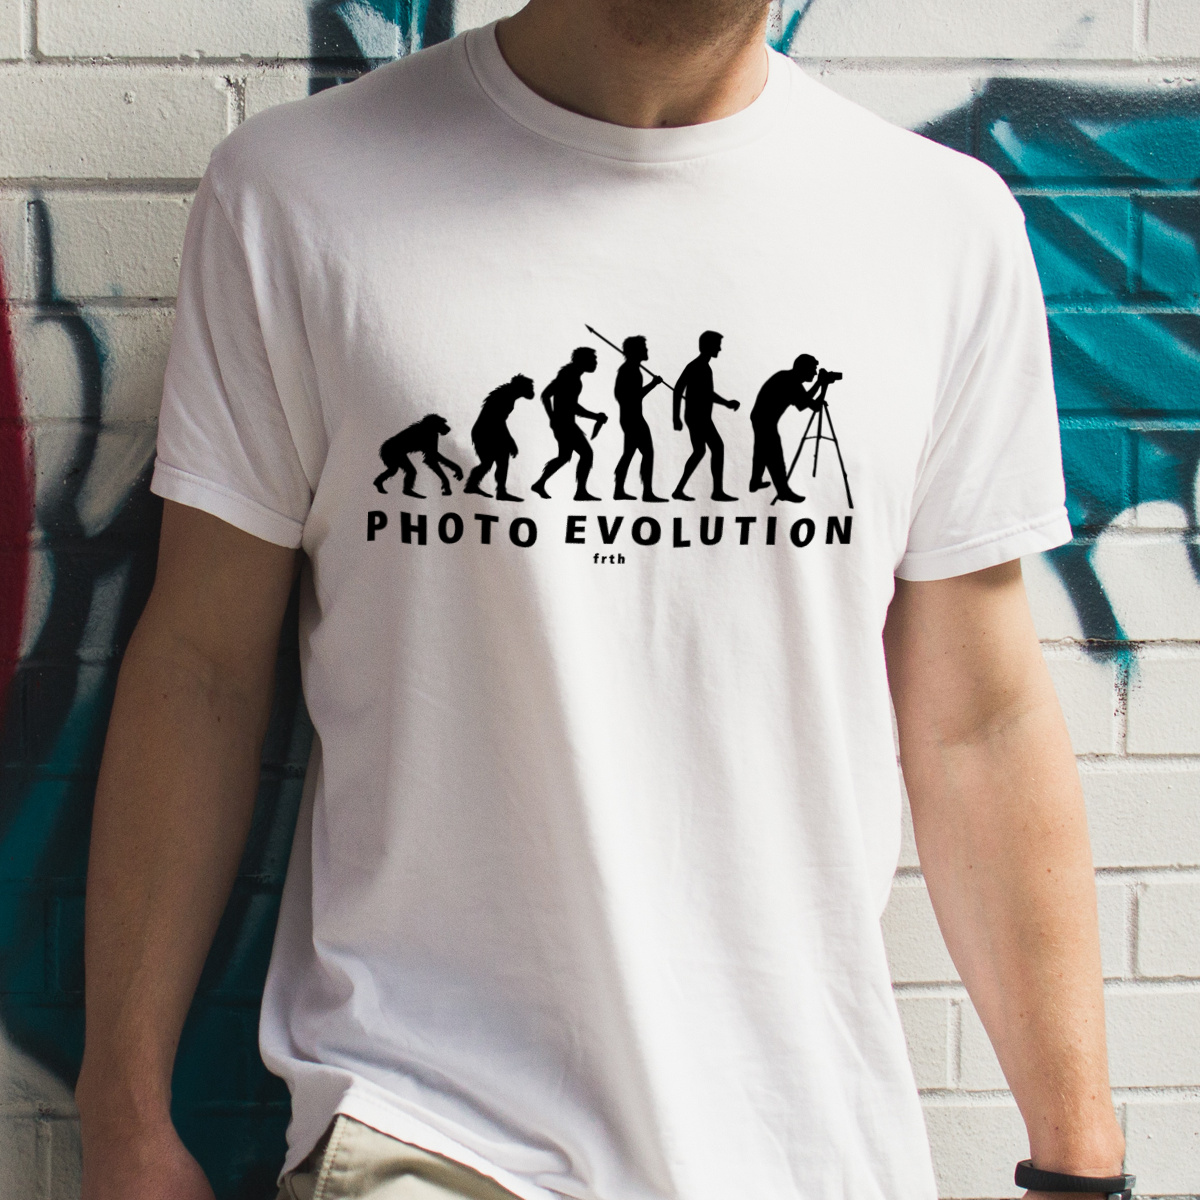 Photo Evolution - Męska Koszulka Biała